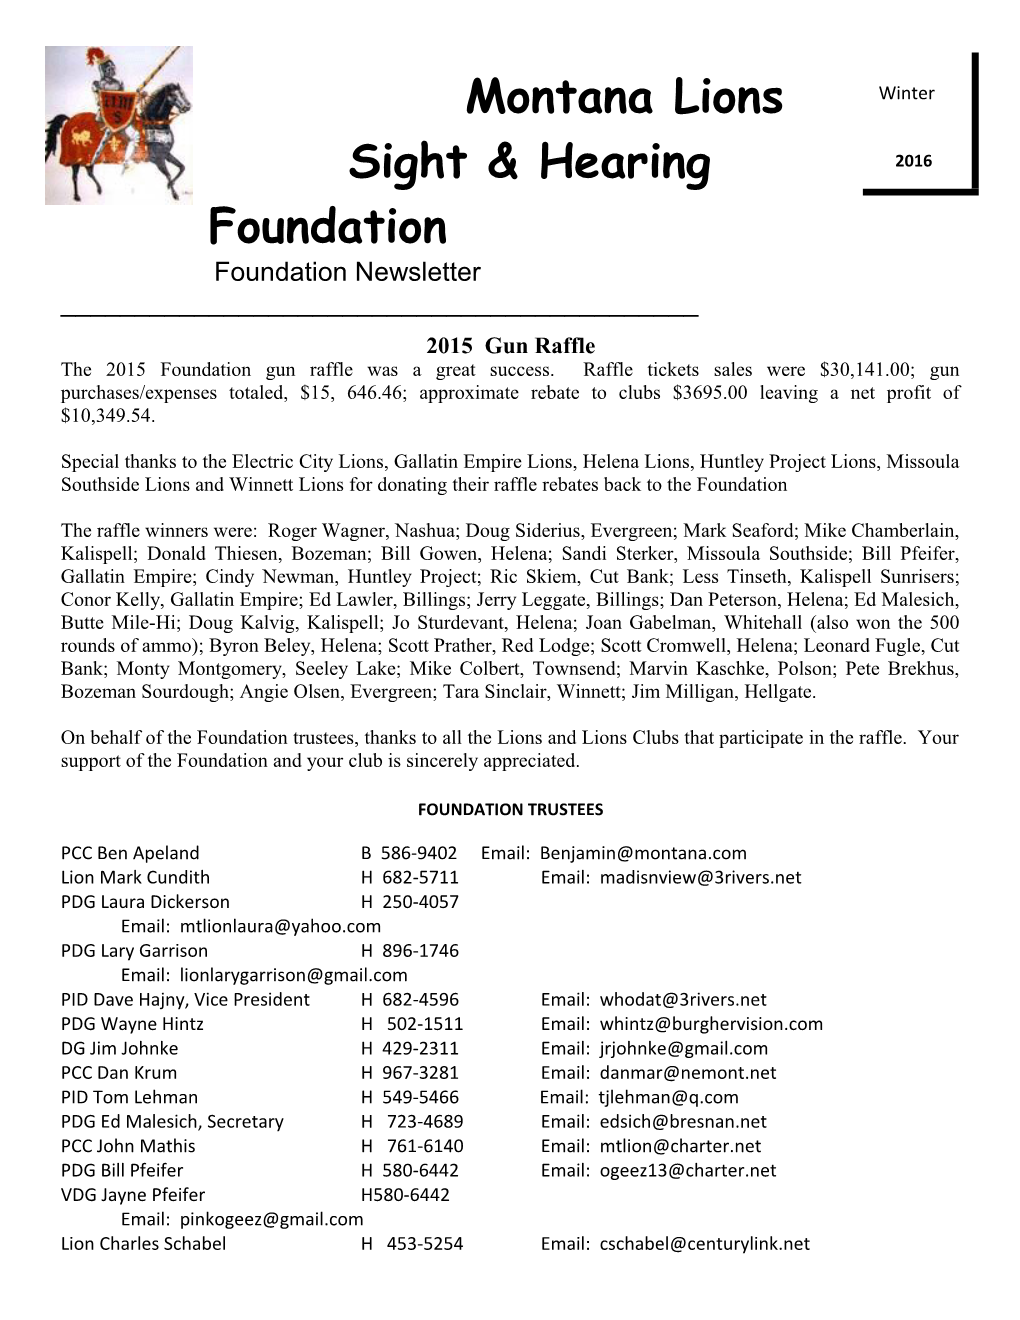 Sight & Hearing Foundation